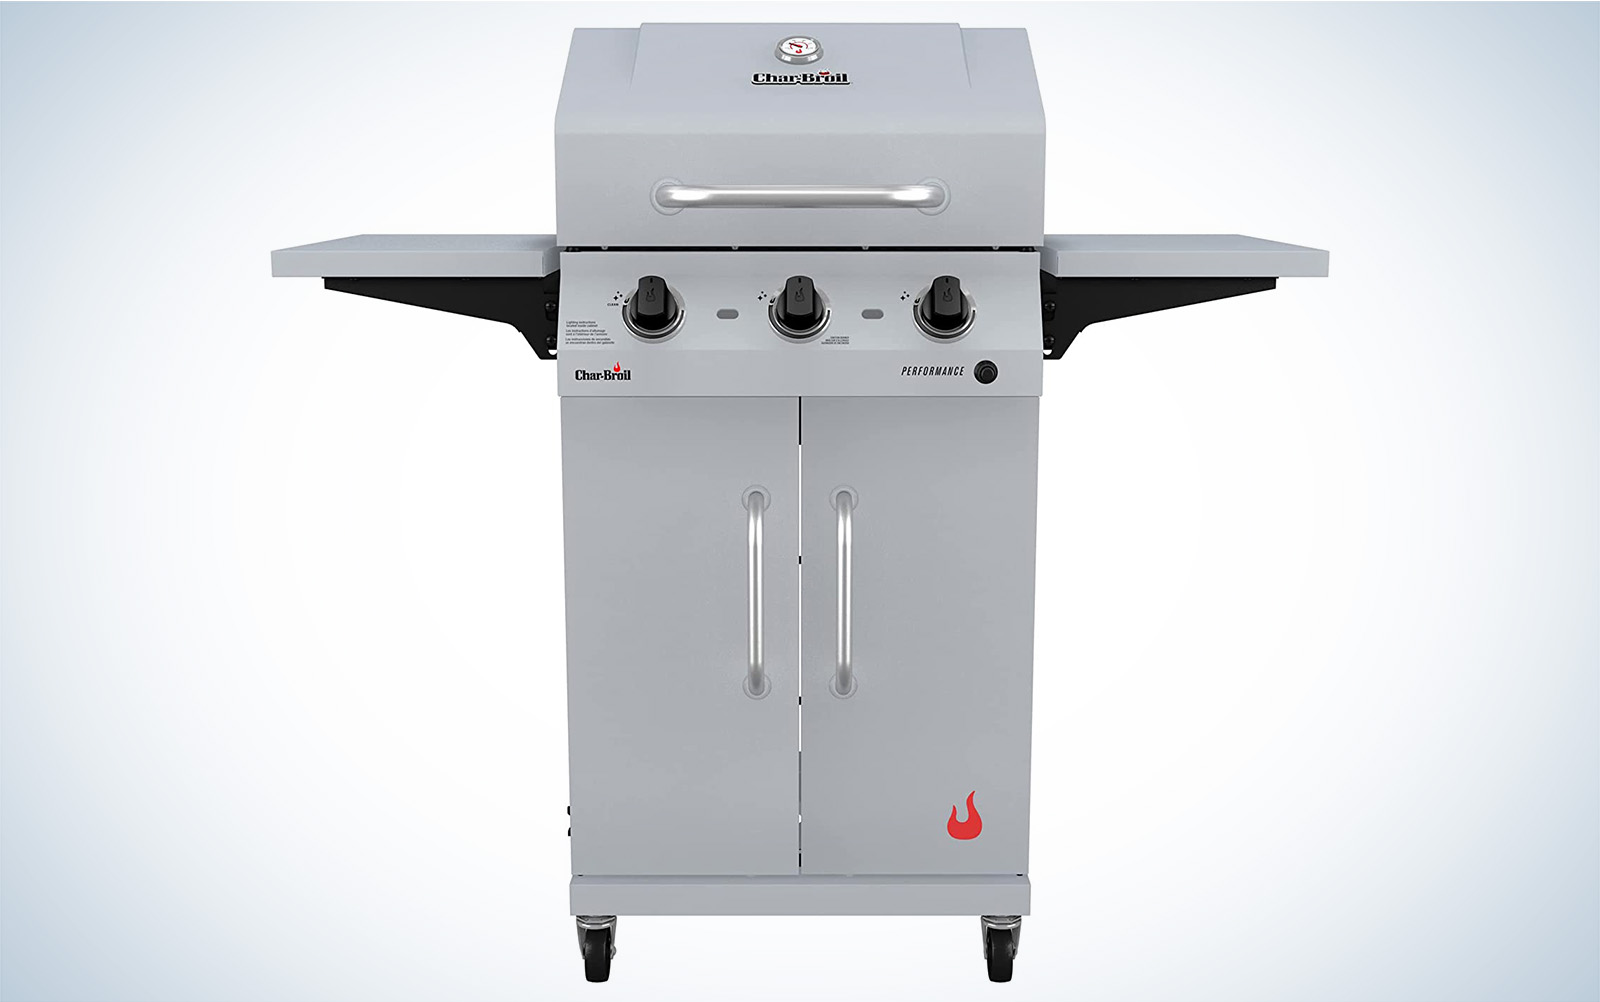 Charbroil three-burner precision grill amazon prime day deal